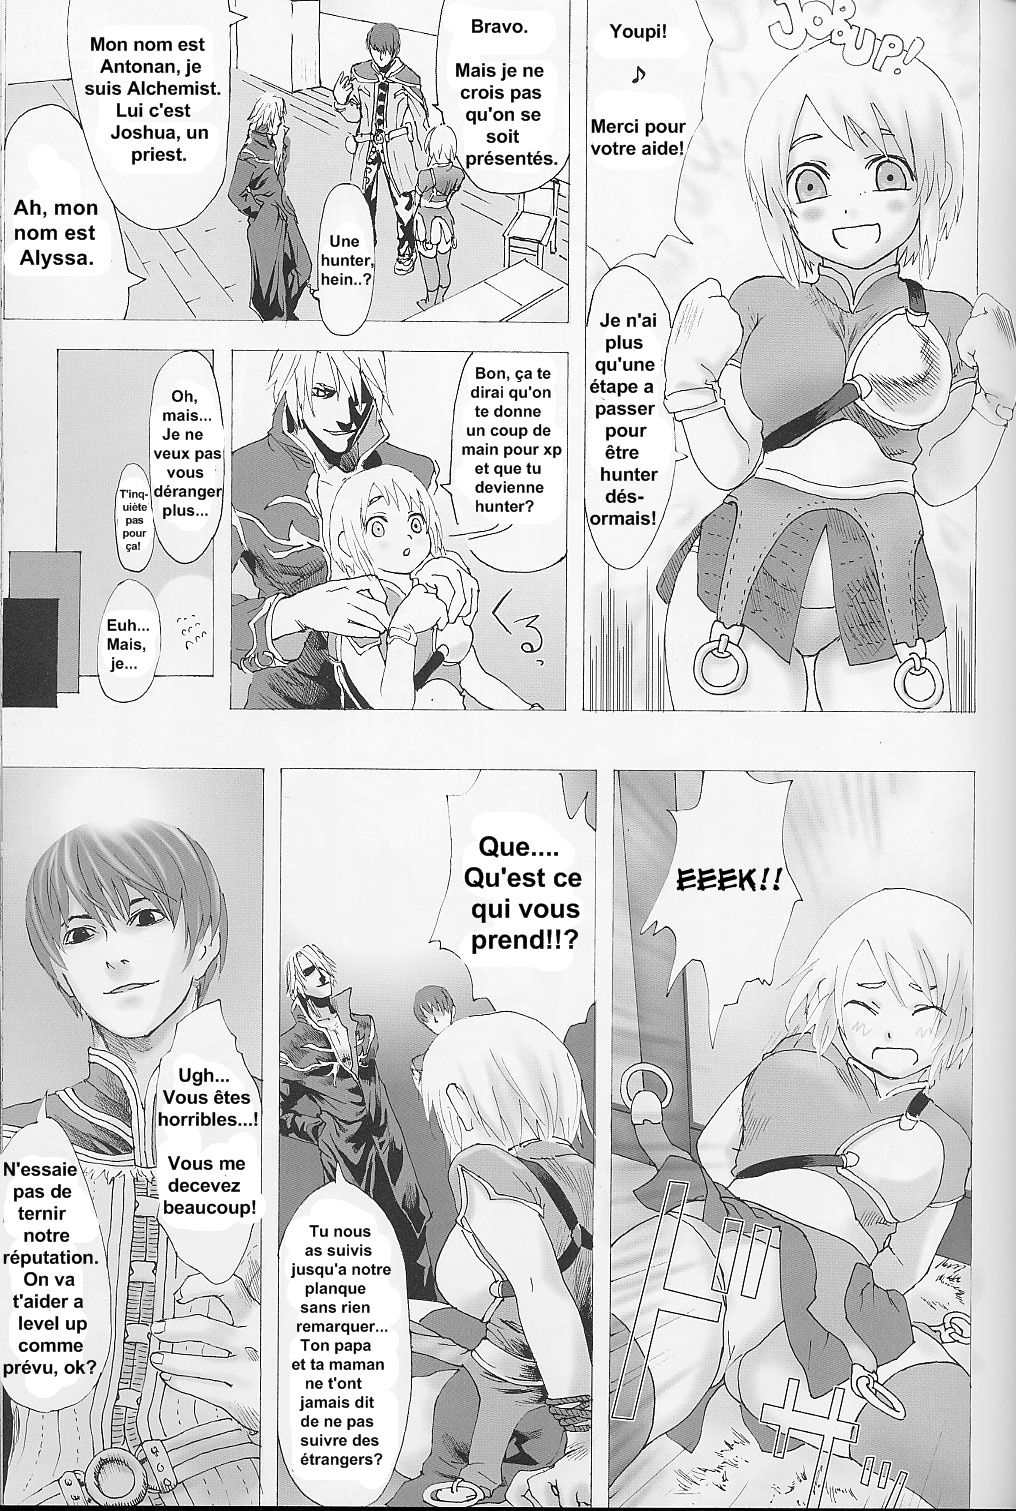 (C67) [Fatalpulse (Asanagi)] Victim Girls (Ragnarok Online) [French] [HFR] 